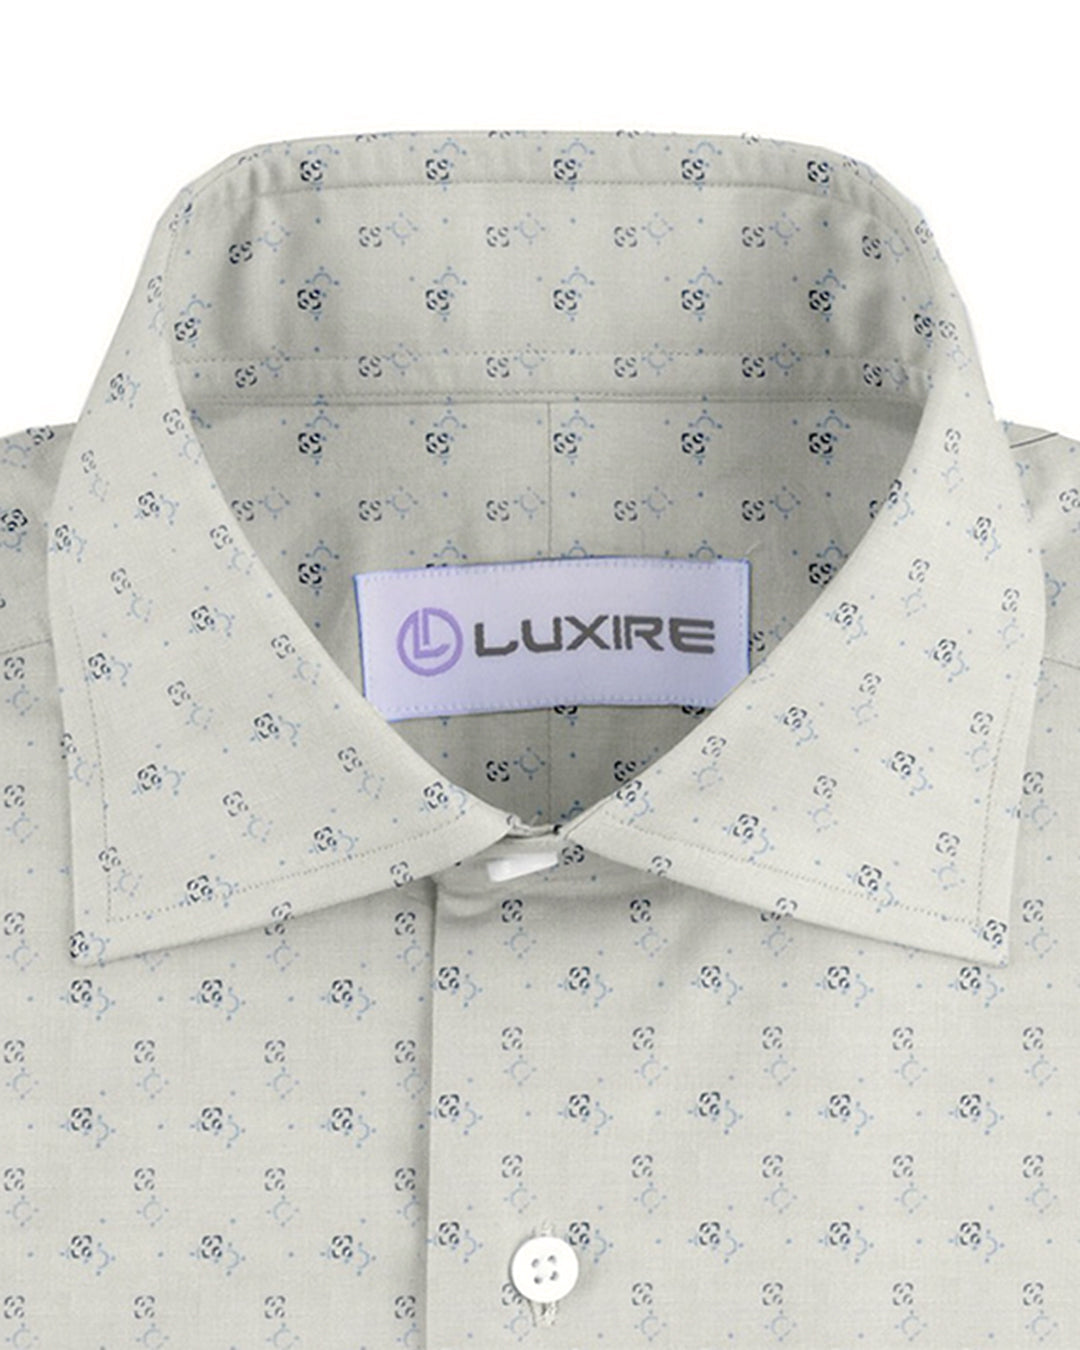 Collar of custom linen shirt for men in blue and navy geometric